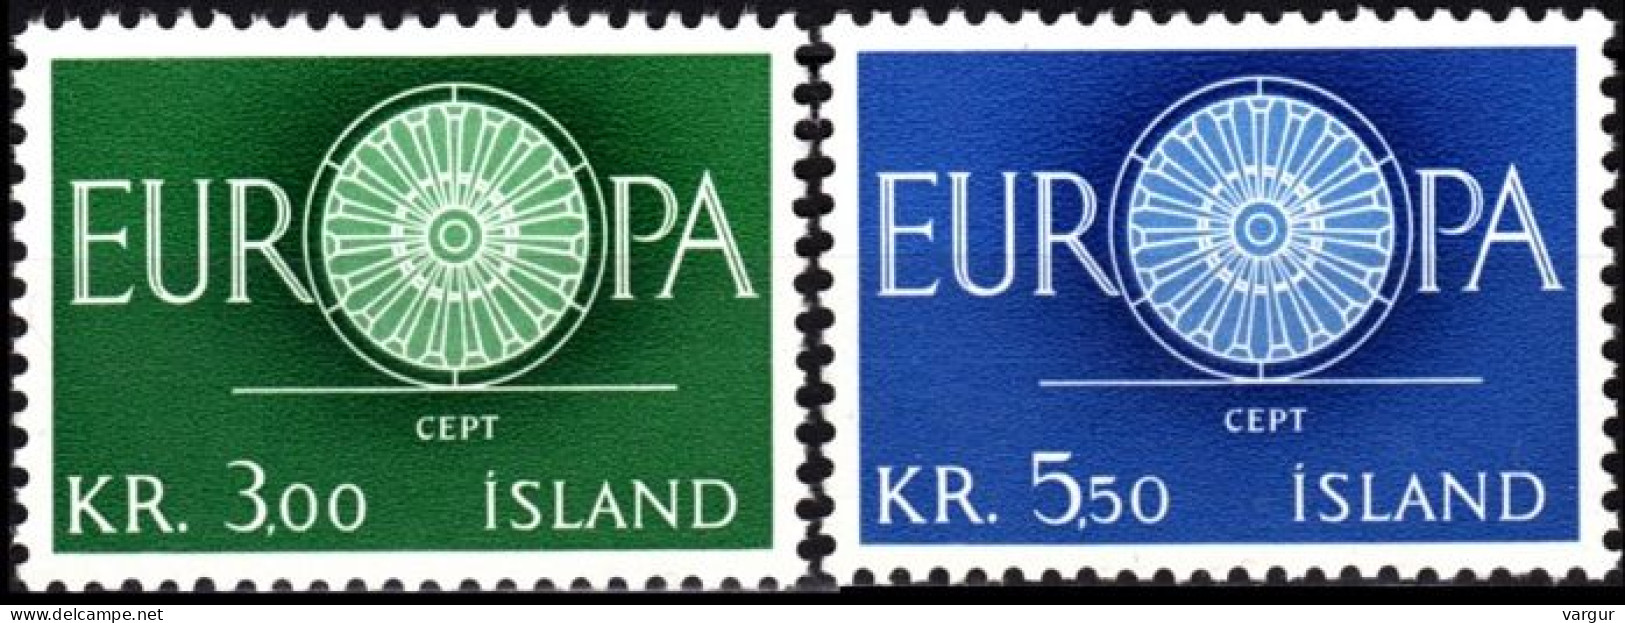 ICELAND / ISLAND 1960 EUROPA. Complete Set, MNH - 1960